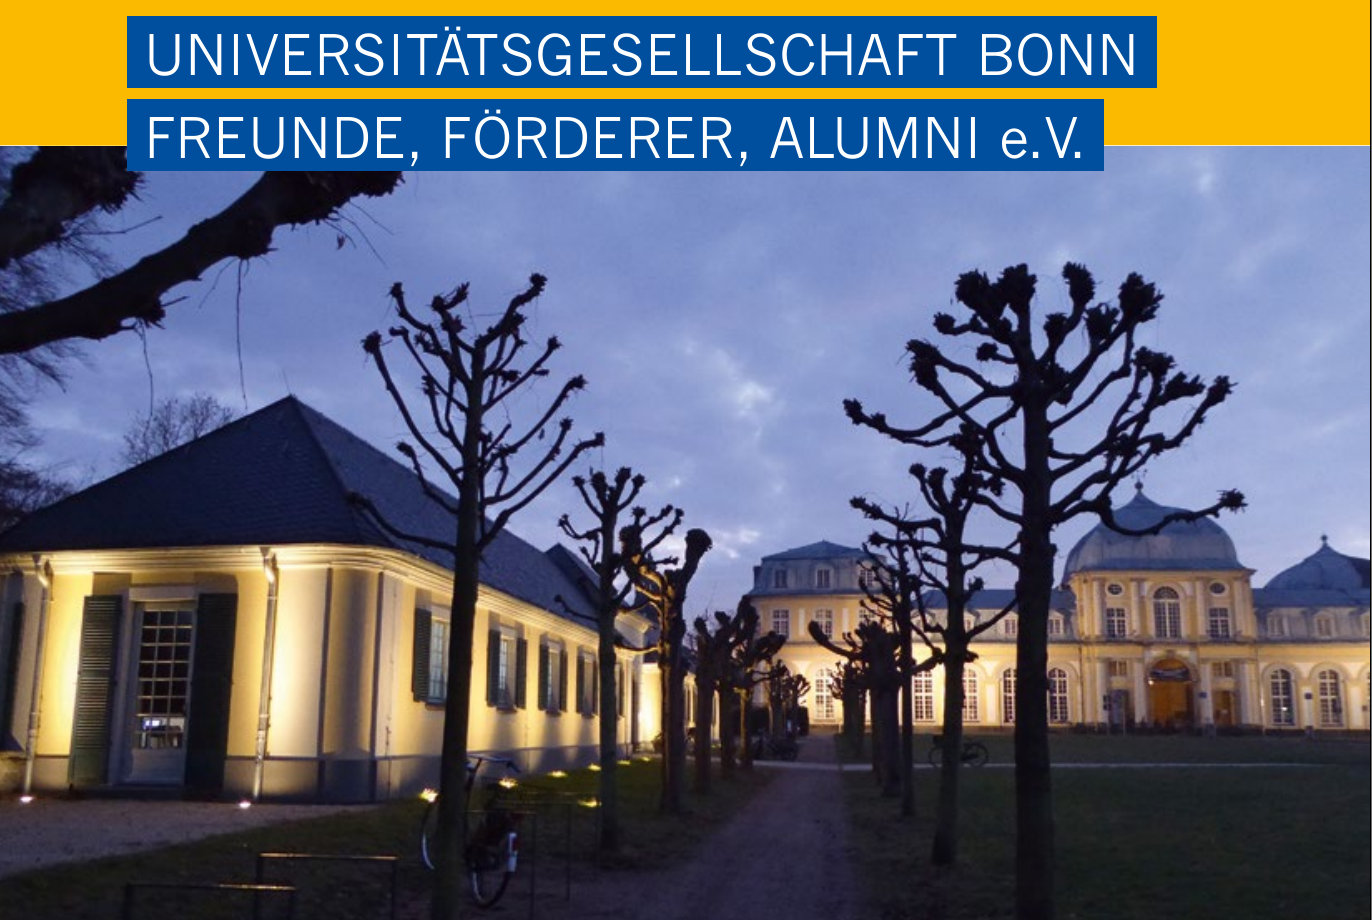 Public outreach by the University Society Bonn